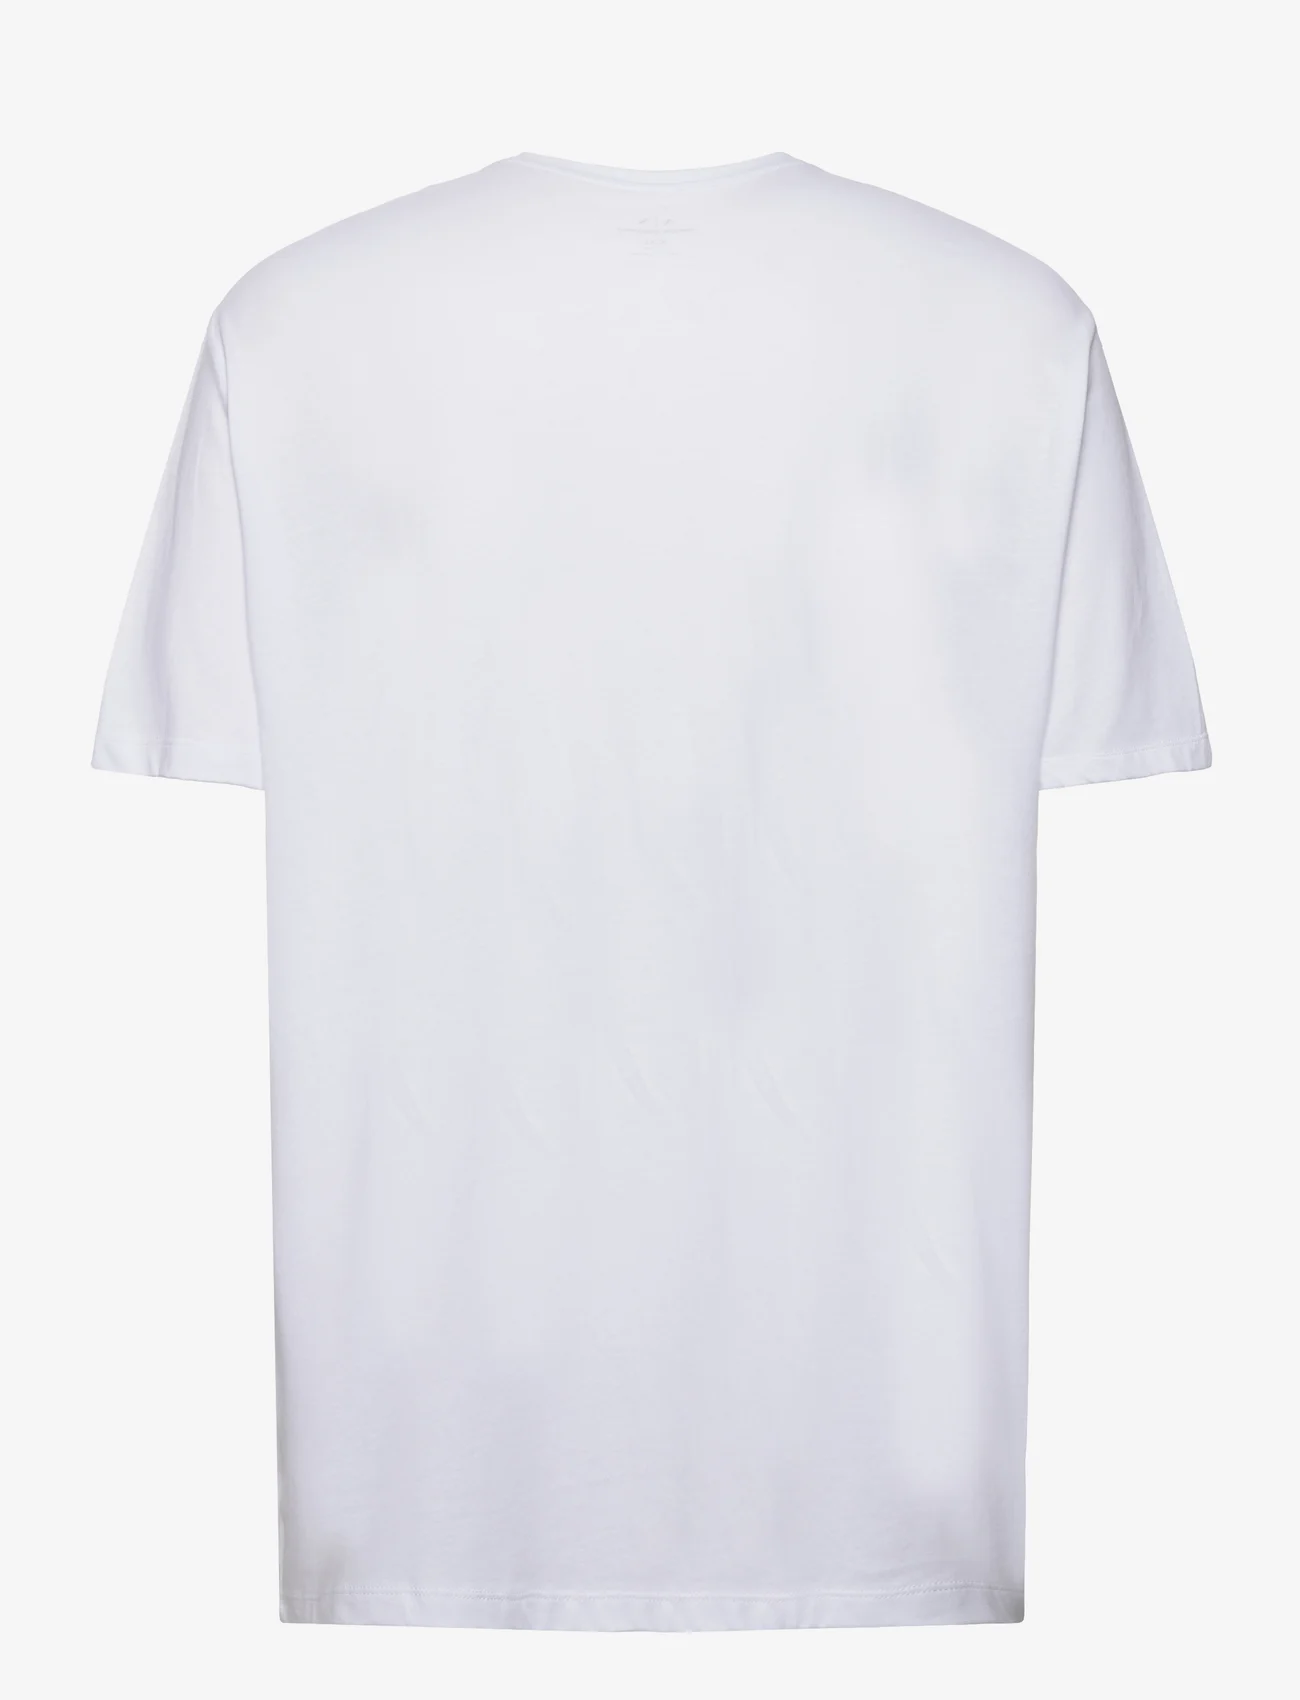 Armani Exchange - T-SHIRT - kortærmede t-shirts - 21cr-white/new york - 1